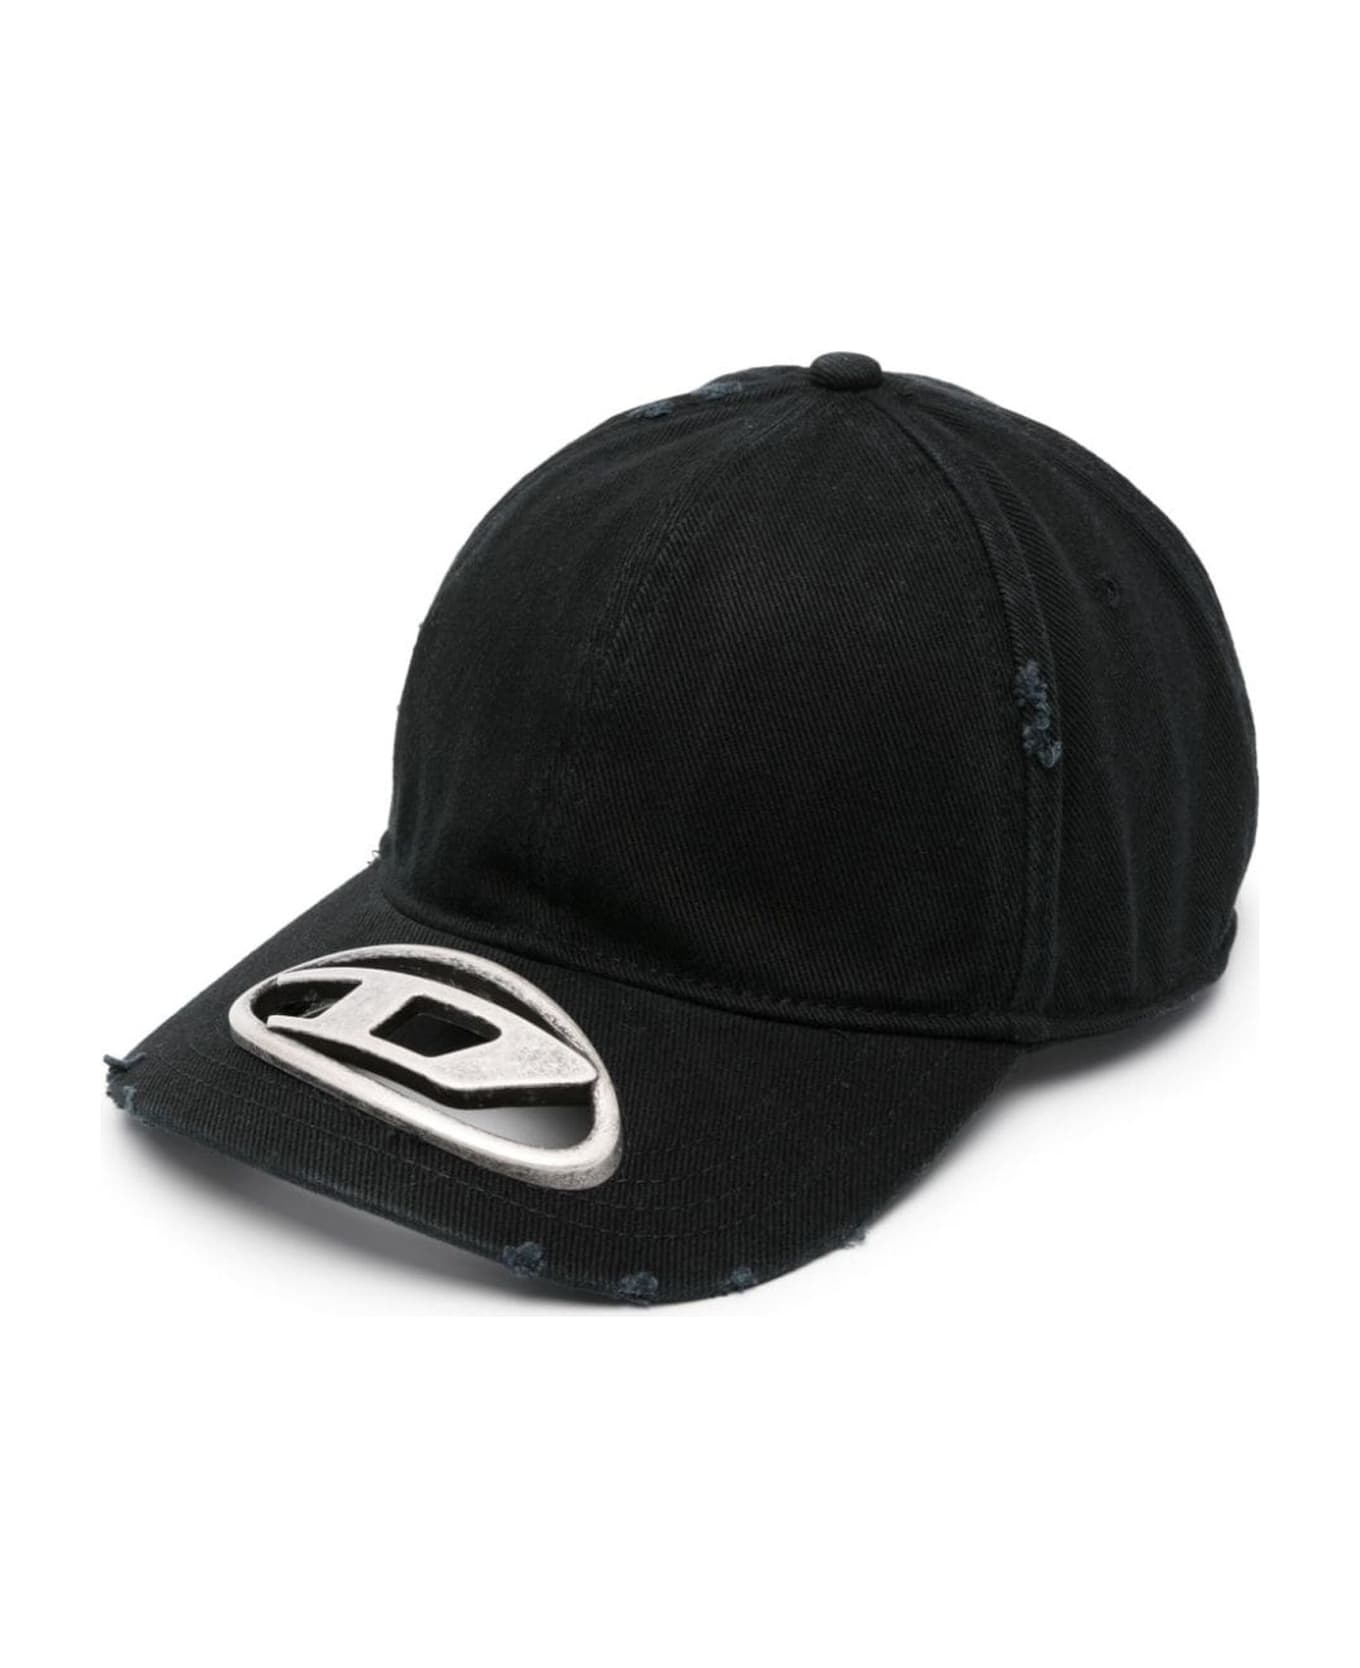 Diesel Hats Black - Xx Black